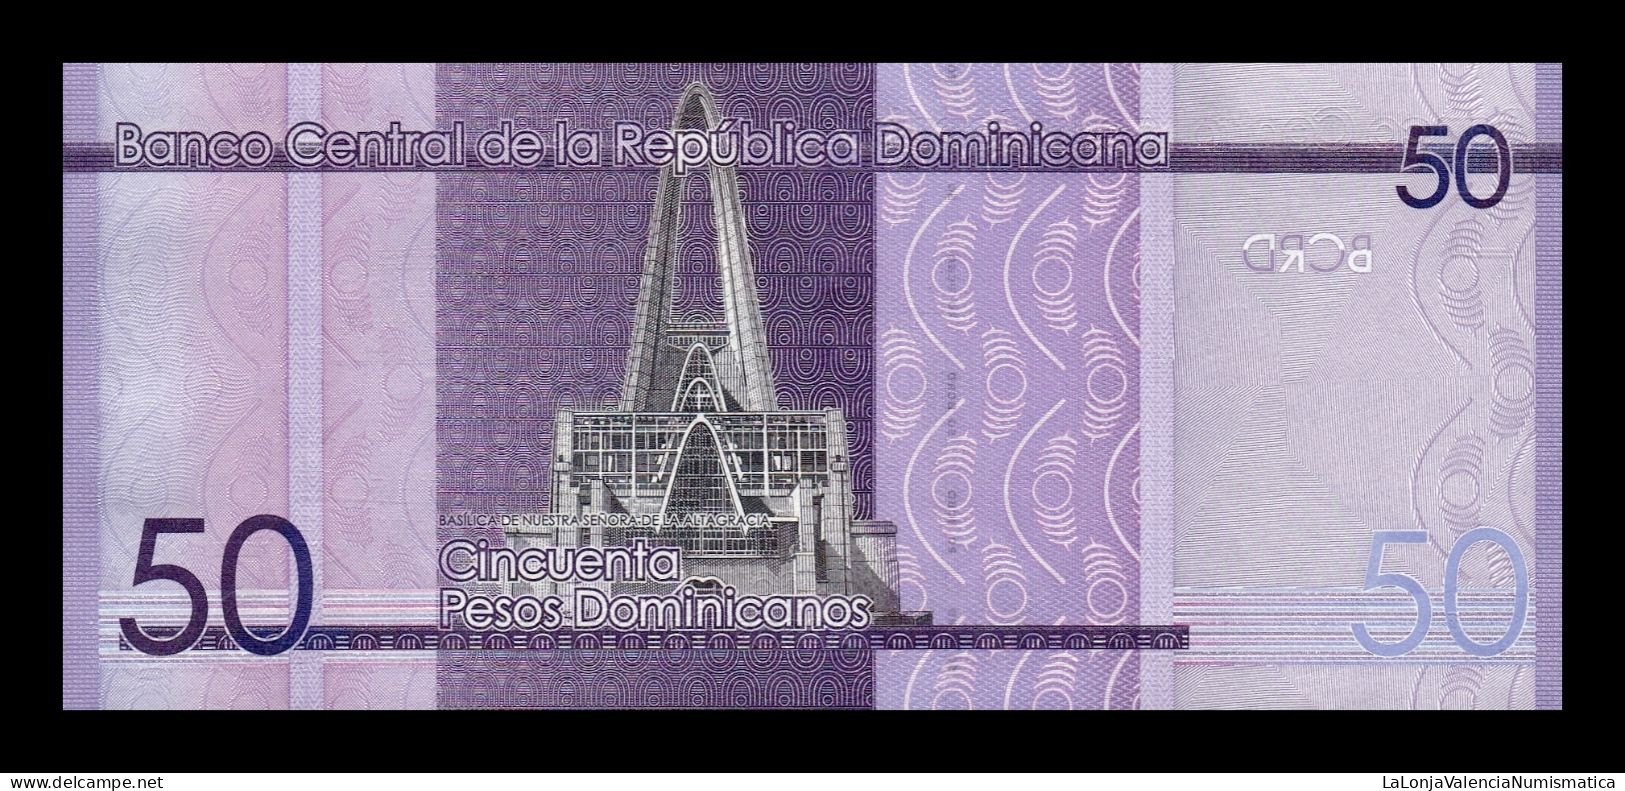 República Dominicana 50 Pesos Dominicanos 2016 Pick 189c Low Serial 146 Sc Unc - República Dominicana